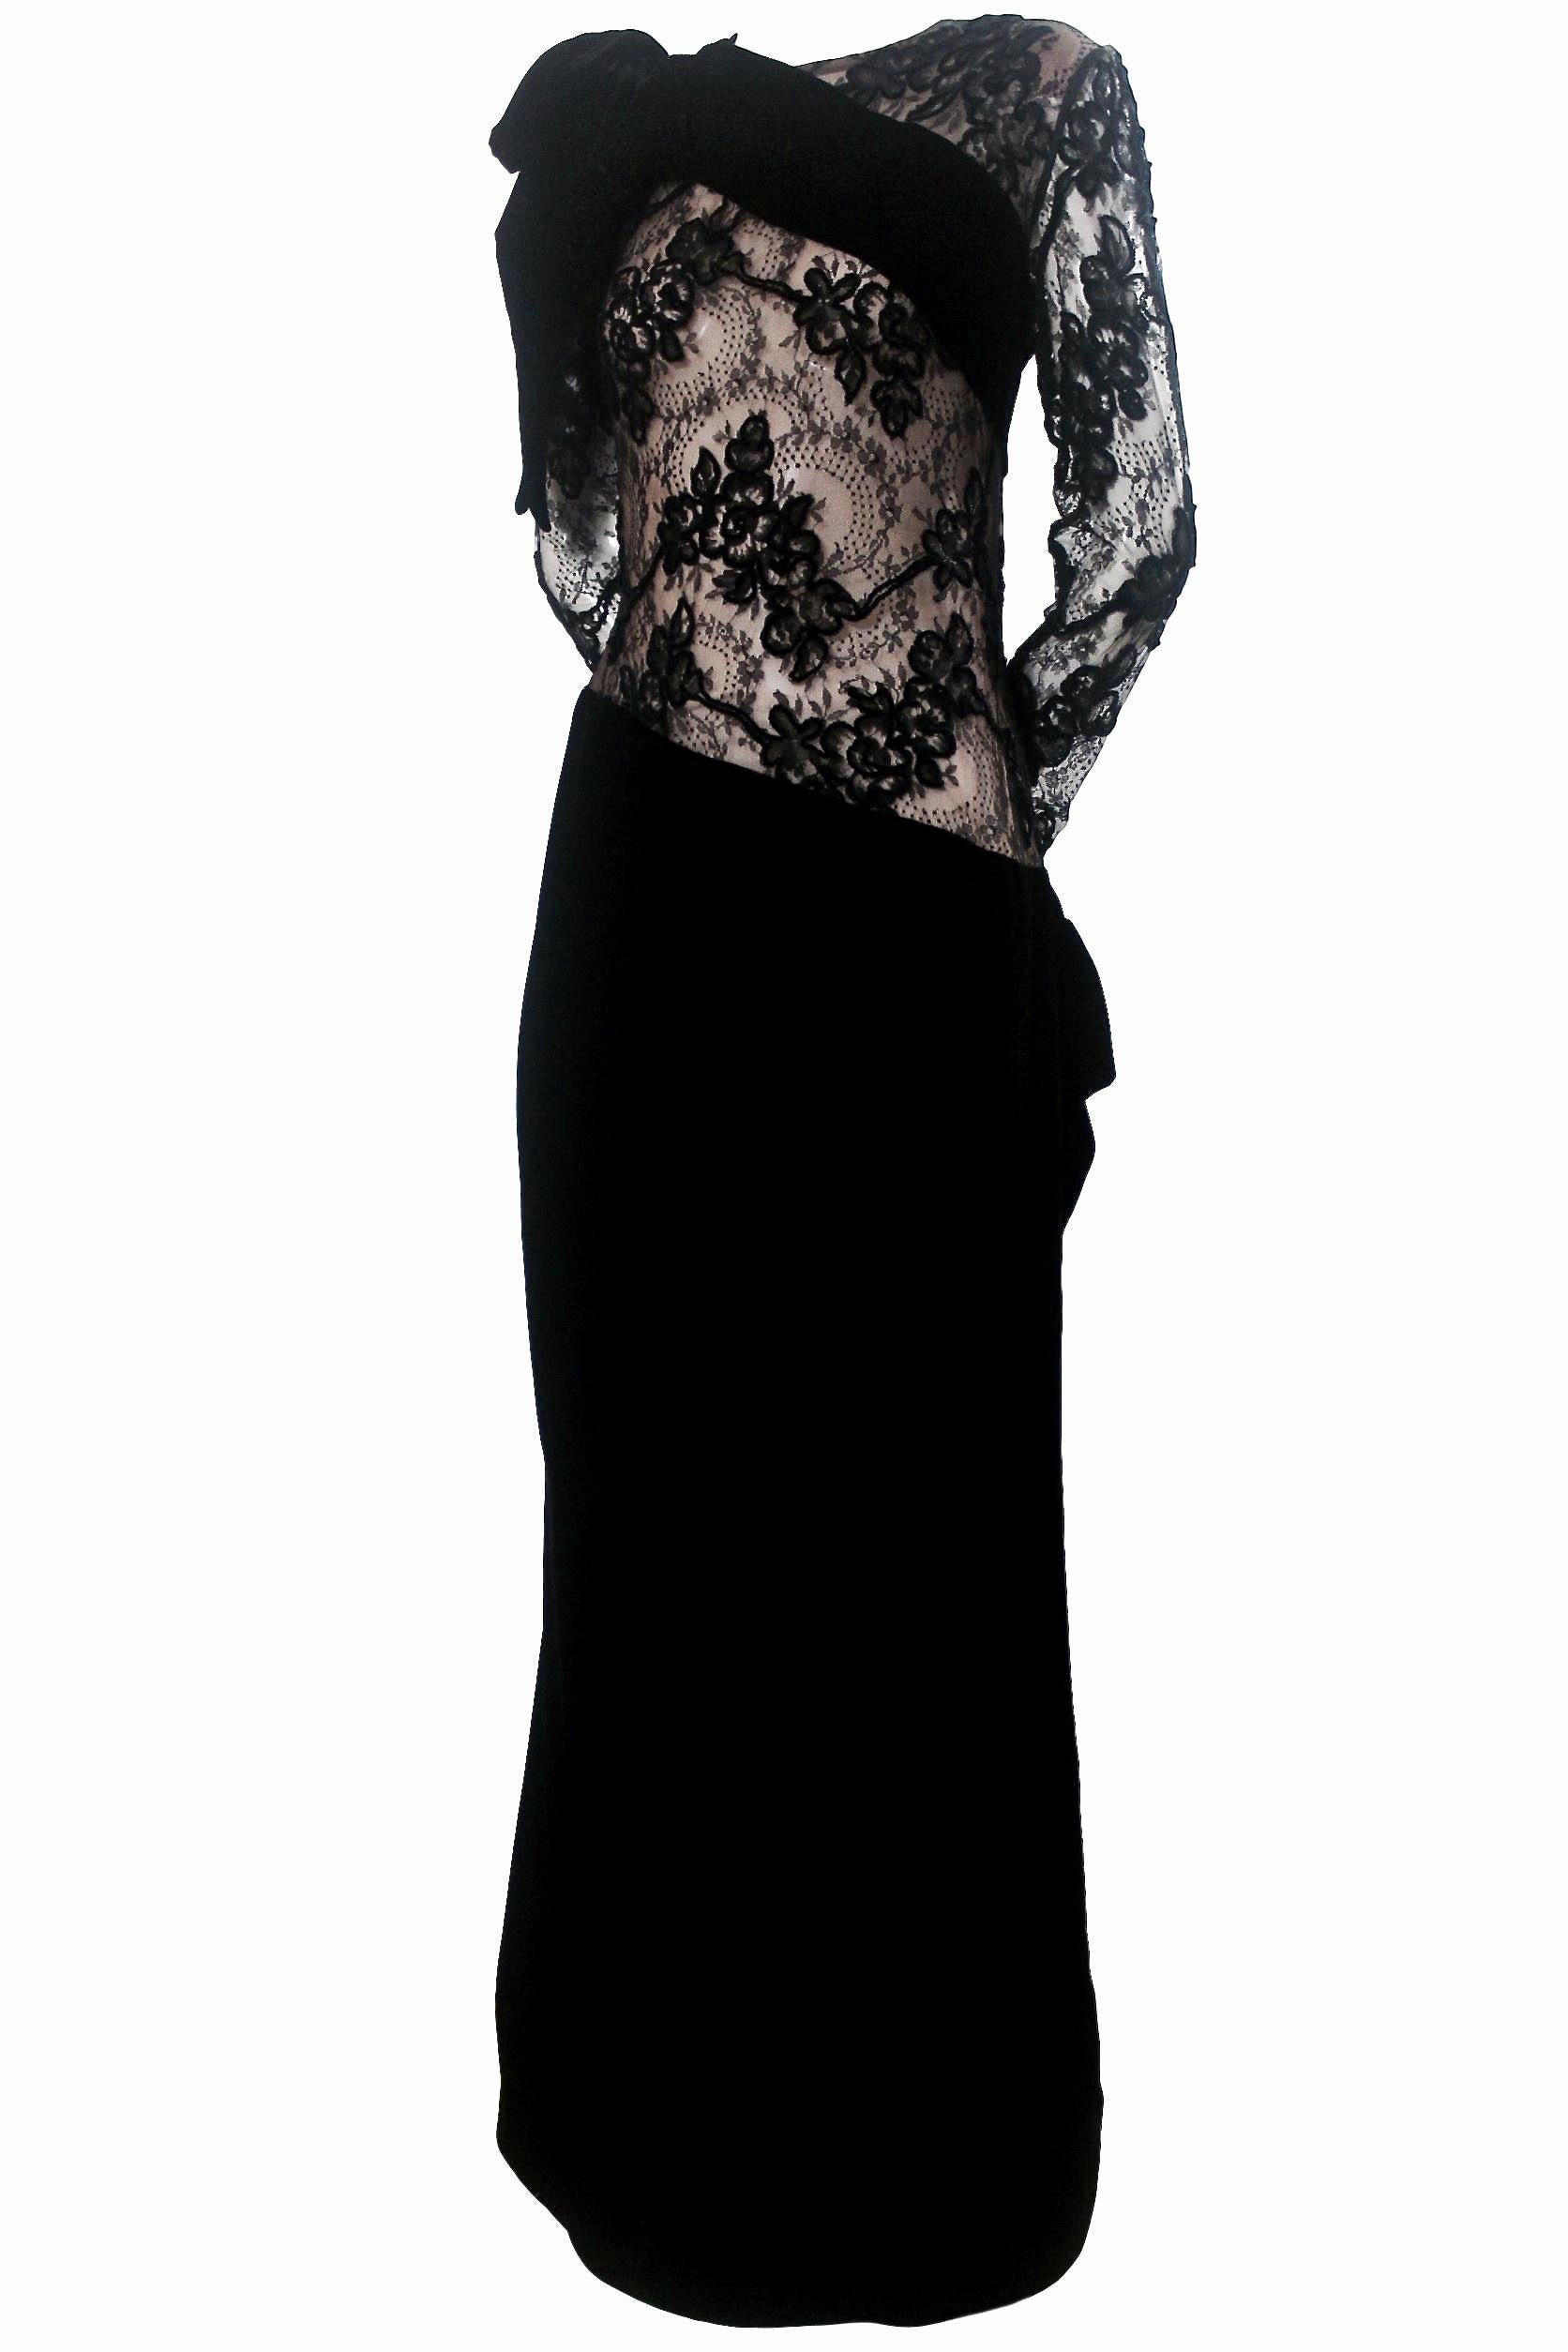 Black Jacqueline de Ribes Velvet and Lace Evening dress with Large Bows For Sale